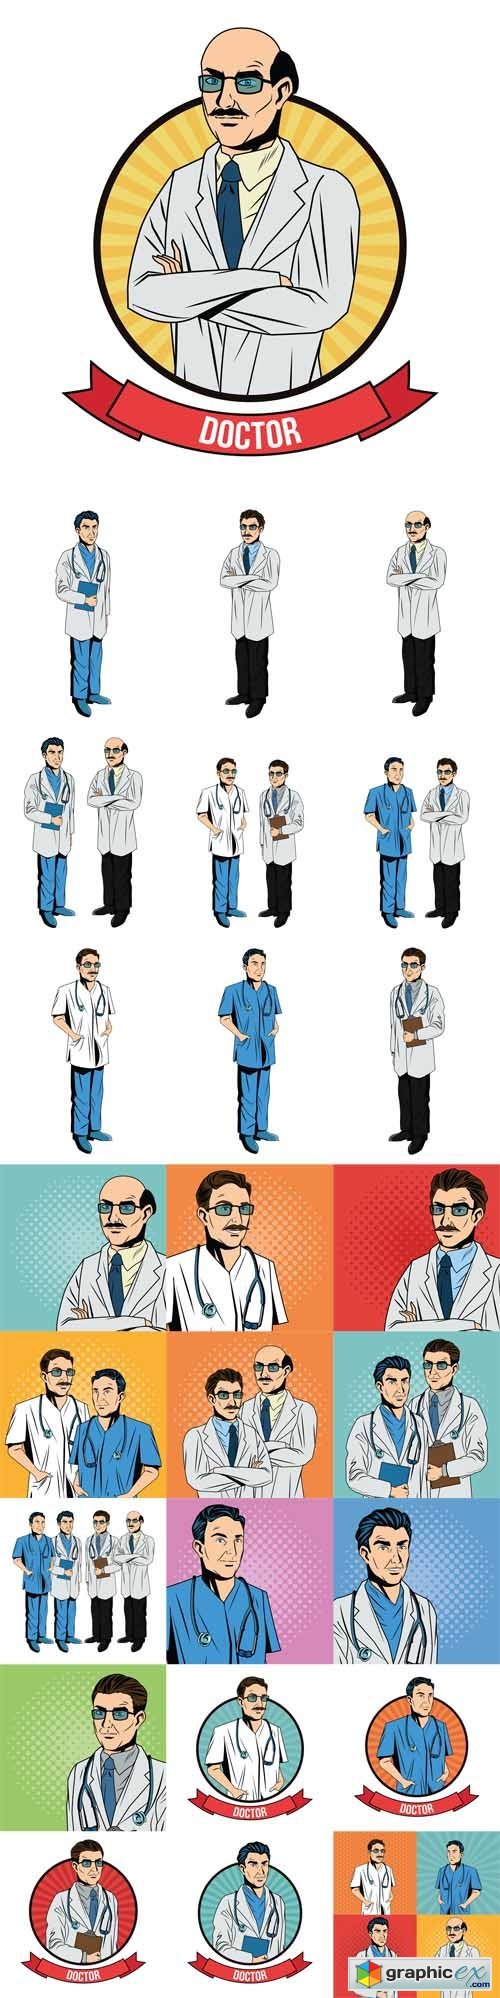 Doctor cartoon with uniform. Medical care pop art comic and retro theme